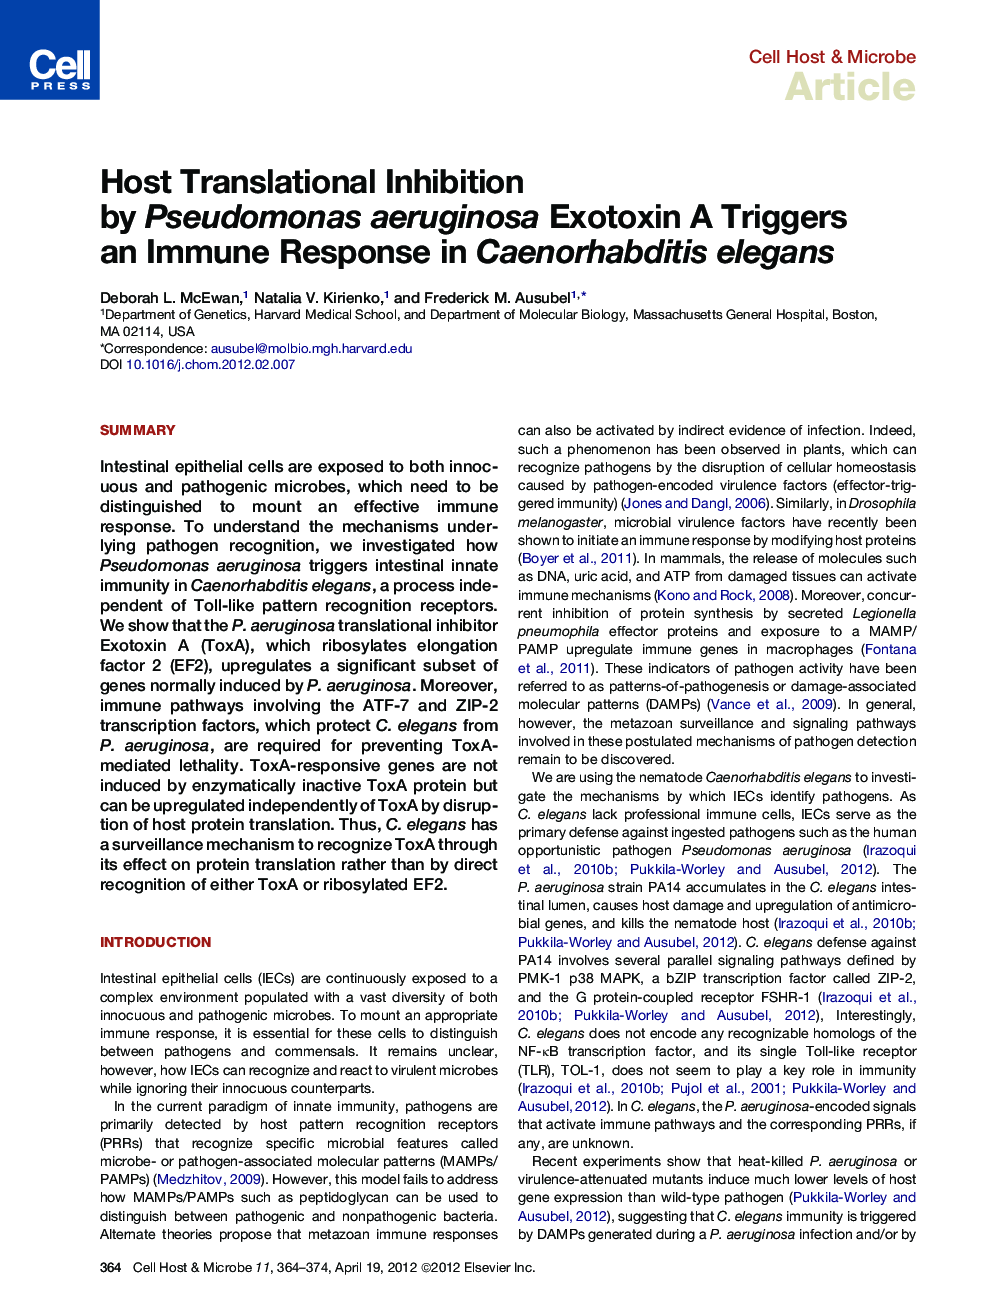 Host Translational Inhibition by Pseudomonas aeruginosa Exotoxin A Triggers an Immune Response in Caenorhabditis elegans